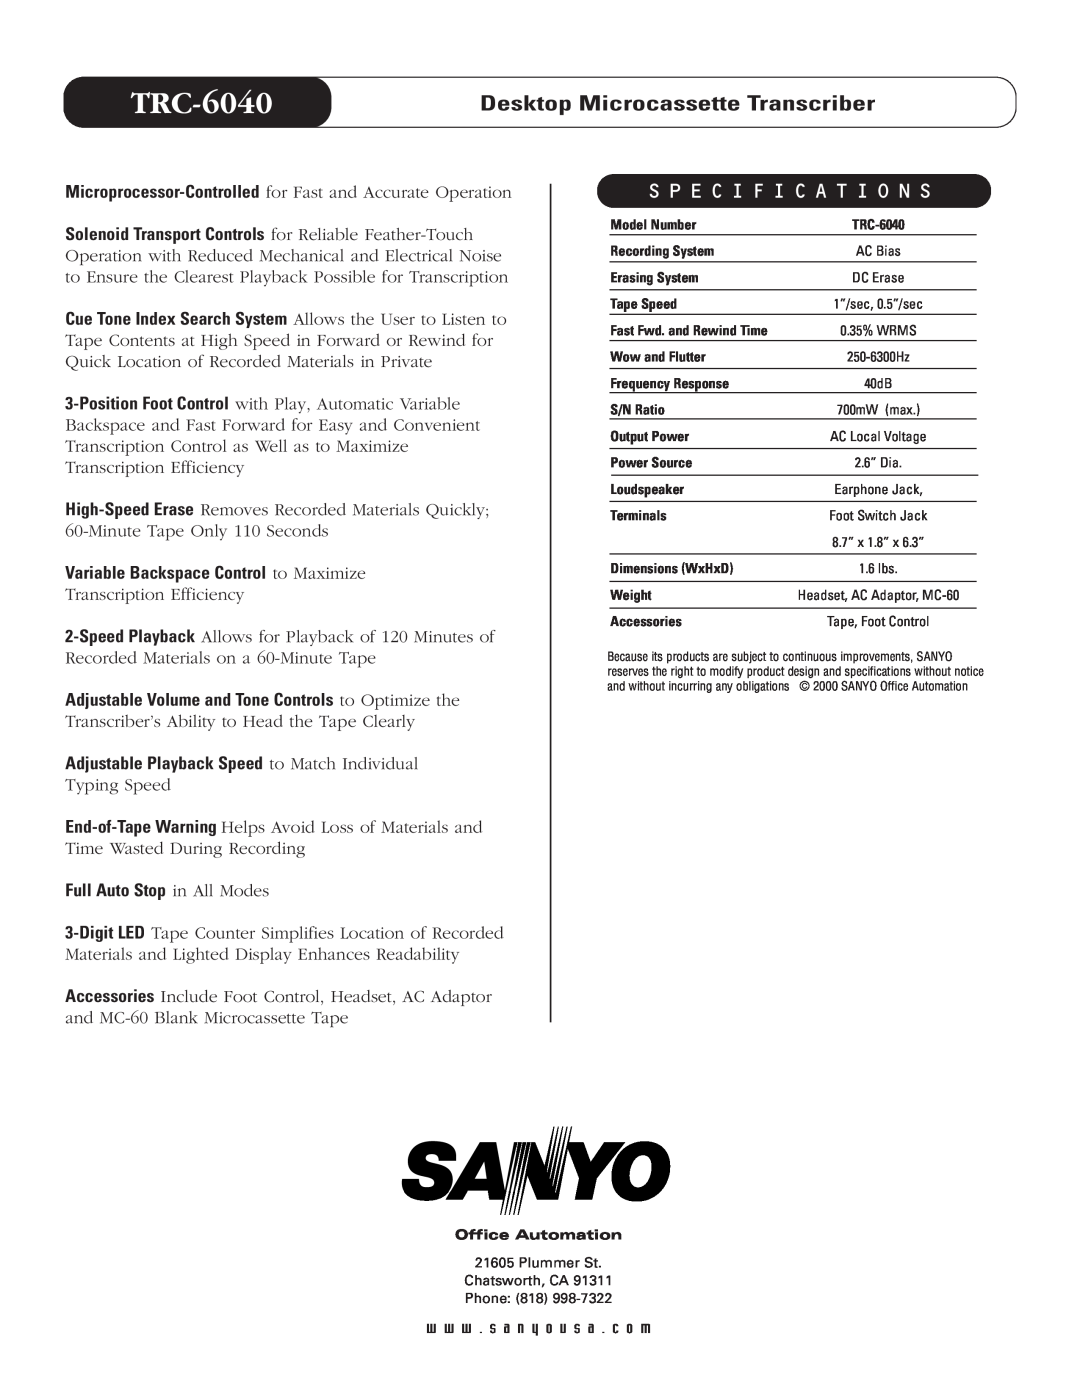 Sanyo TRC-6040 Desktop Microcassette Transcriber, S P E C I F I C A T I O N S, Variable Backspace Control to Maximize 